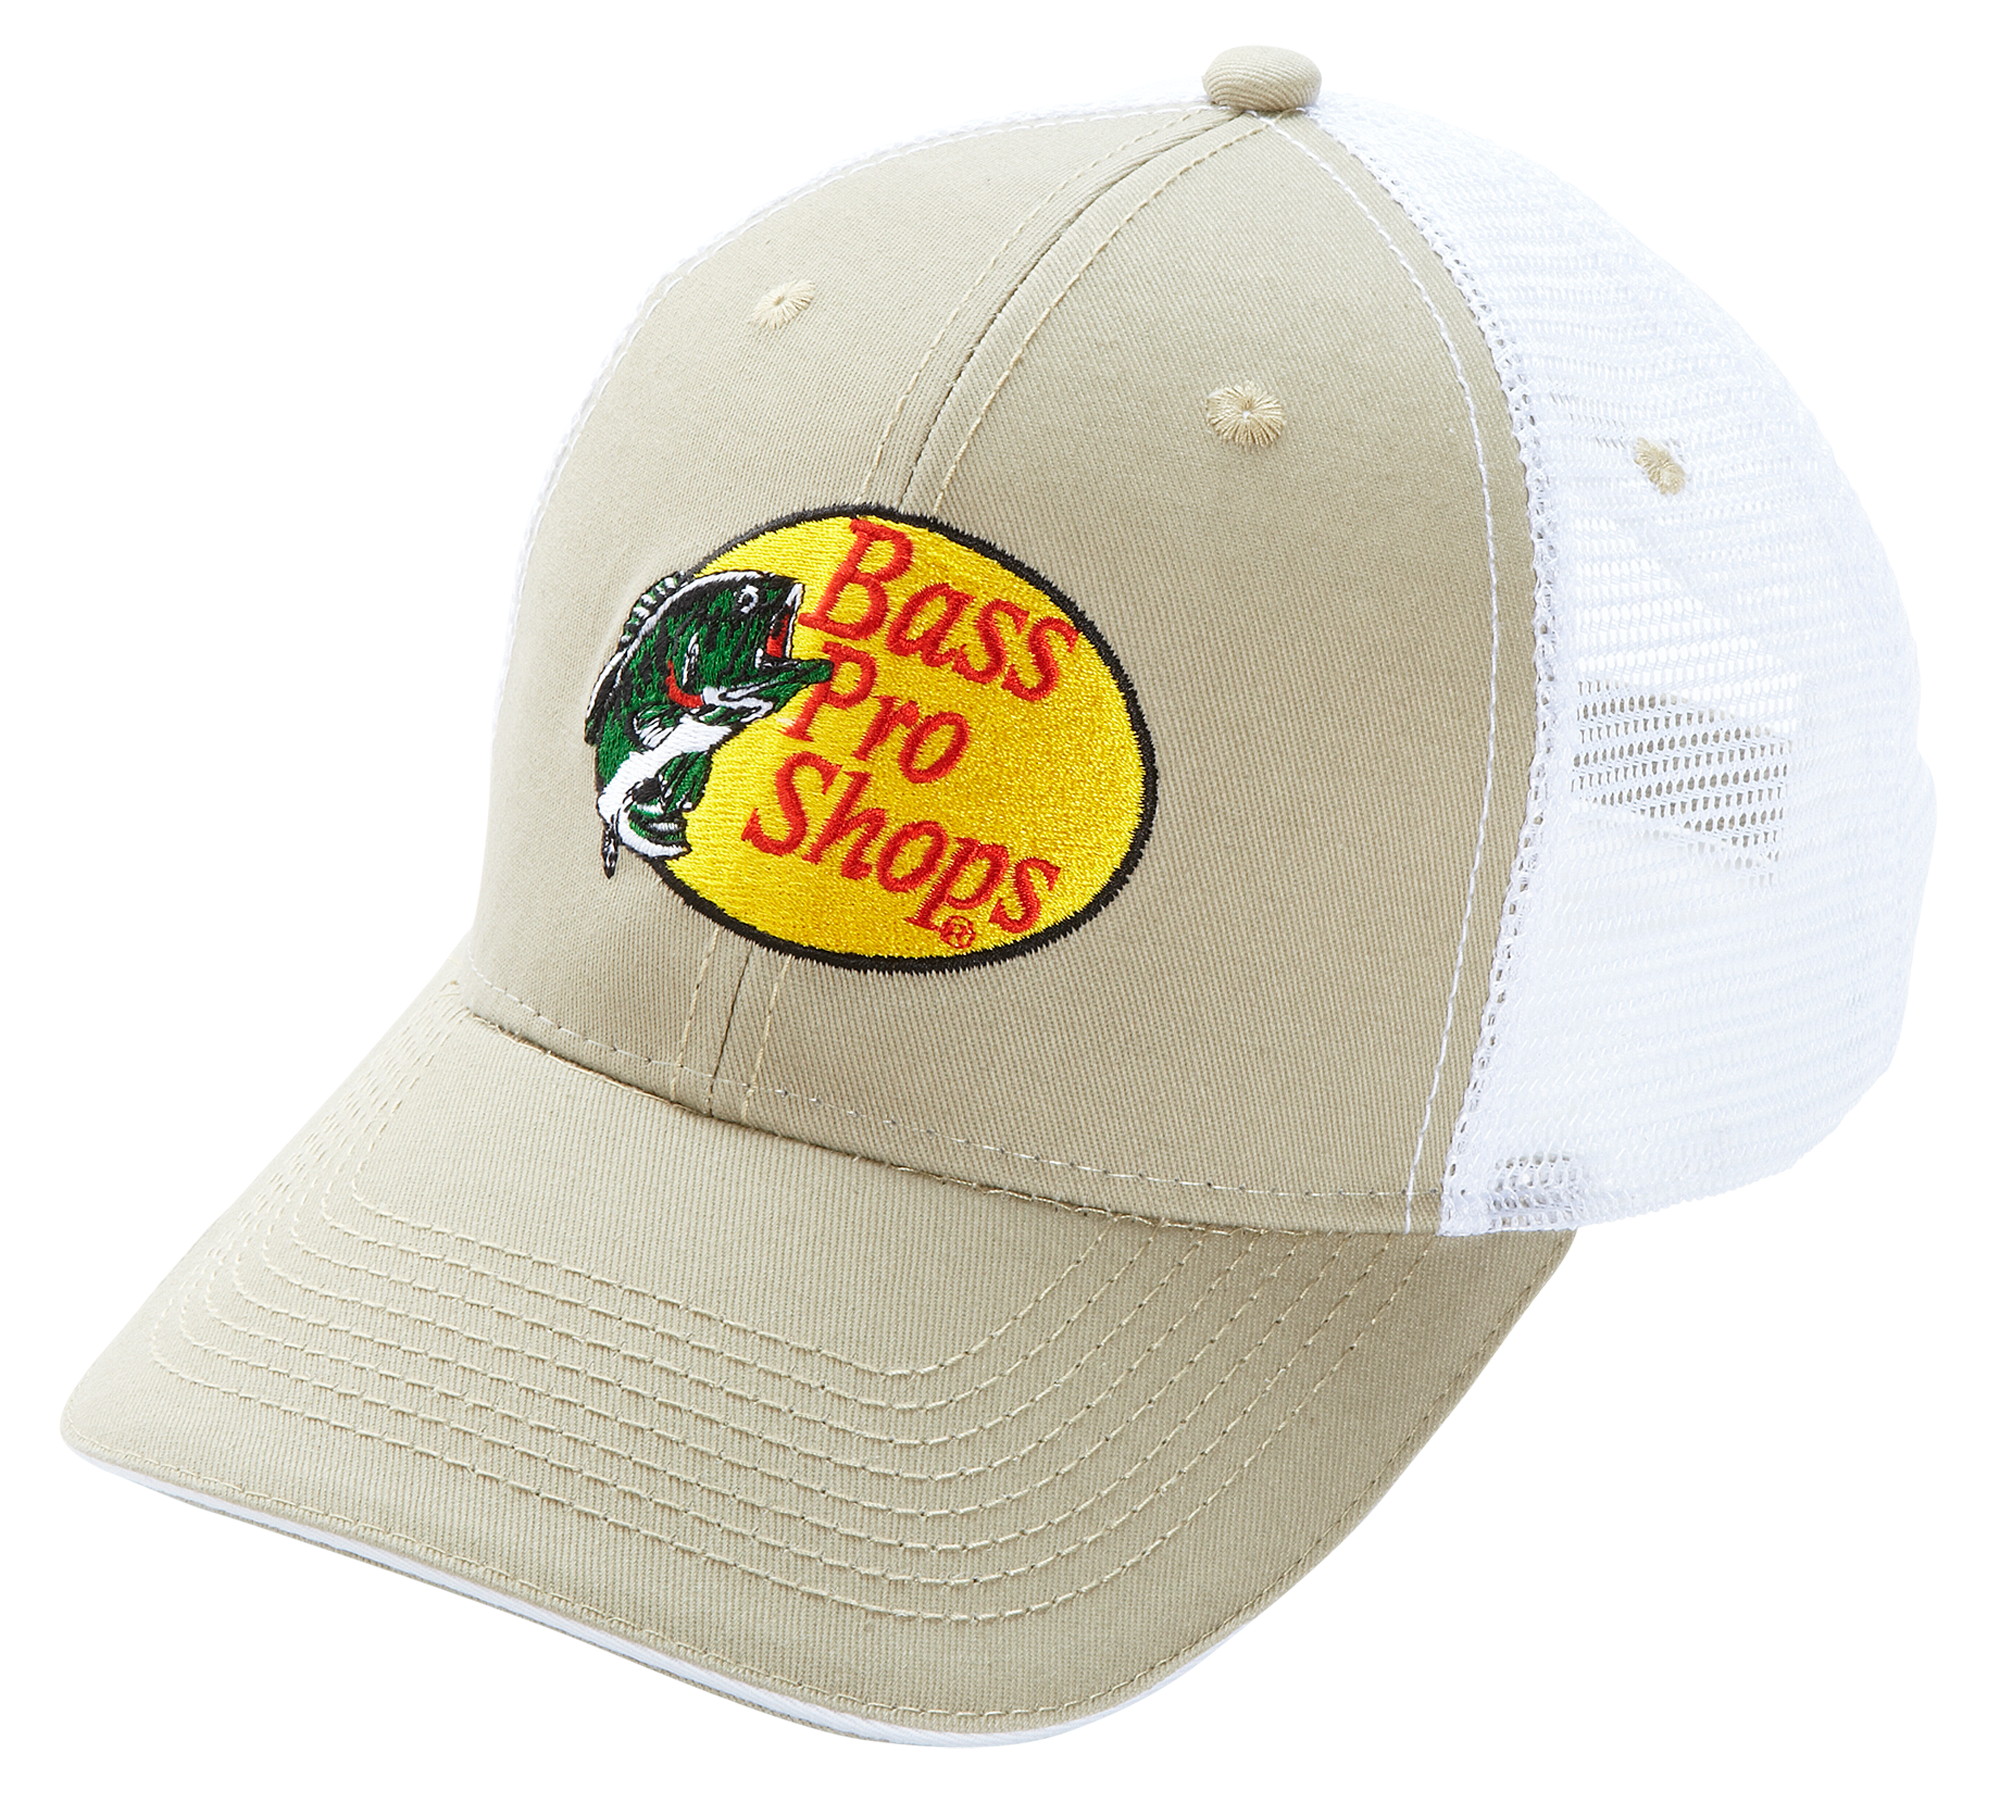 Bass Pro Shops Mesh Trucker Cap - Kelly Green